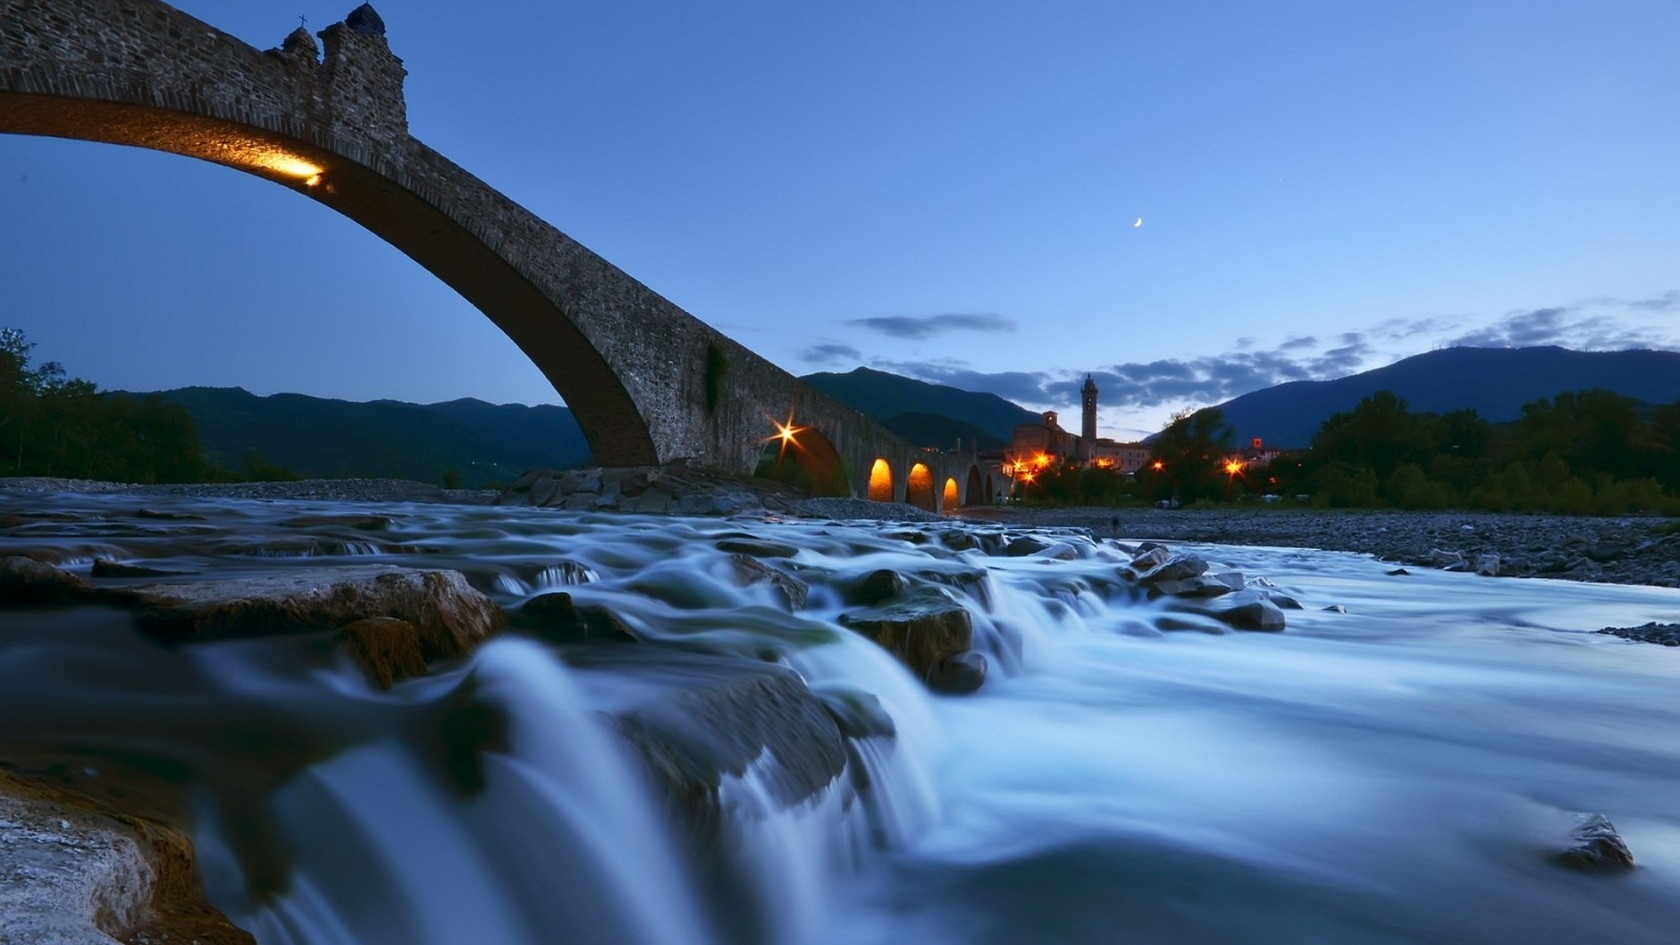 Ponte del Diavolo Night View for 1680 x 945 HDTV resolution